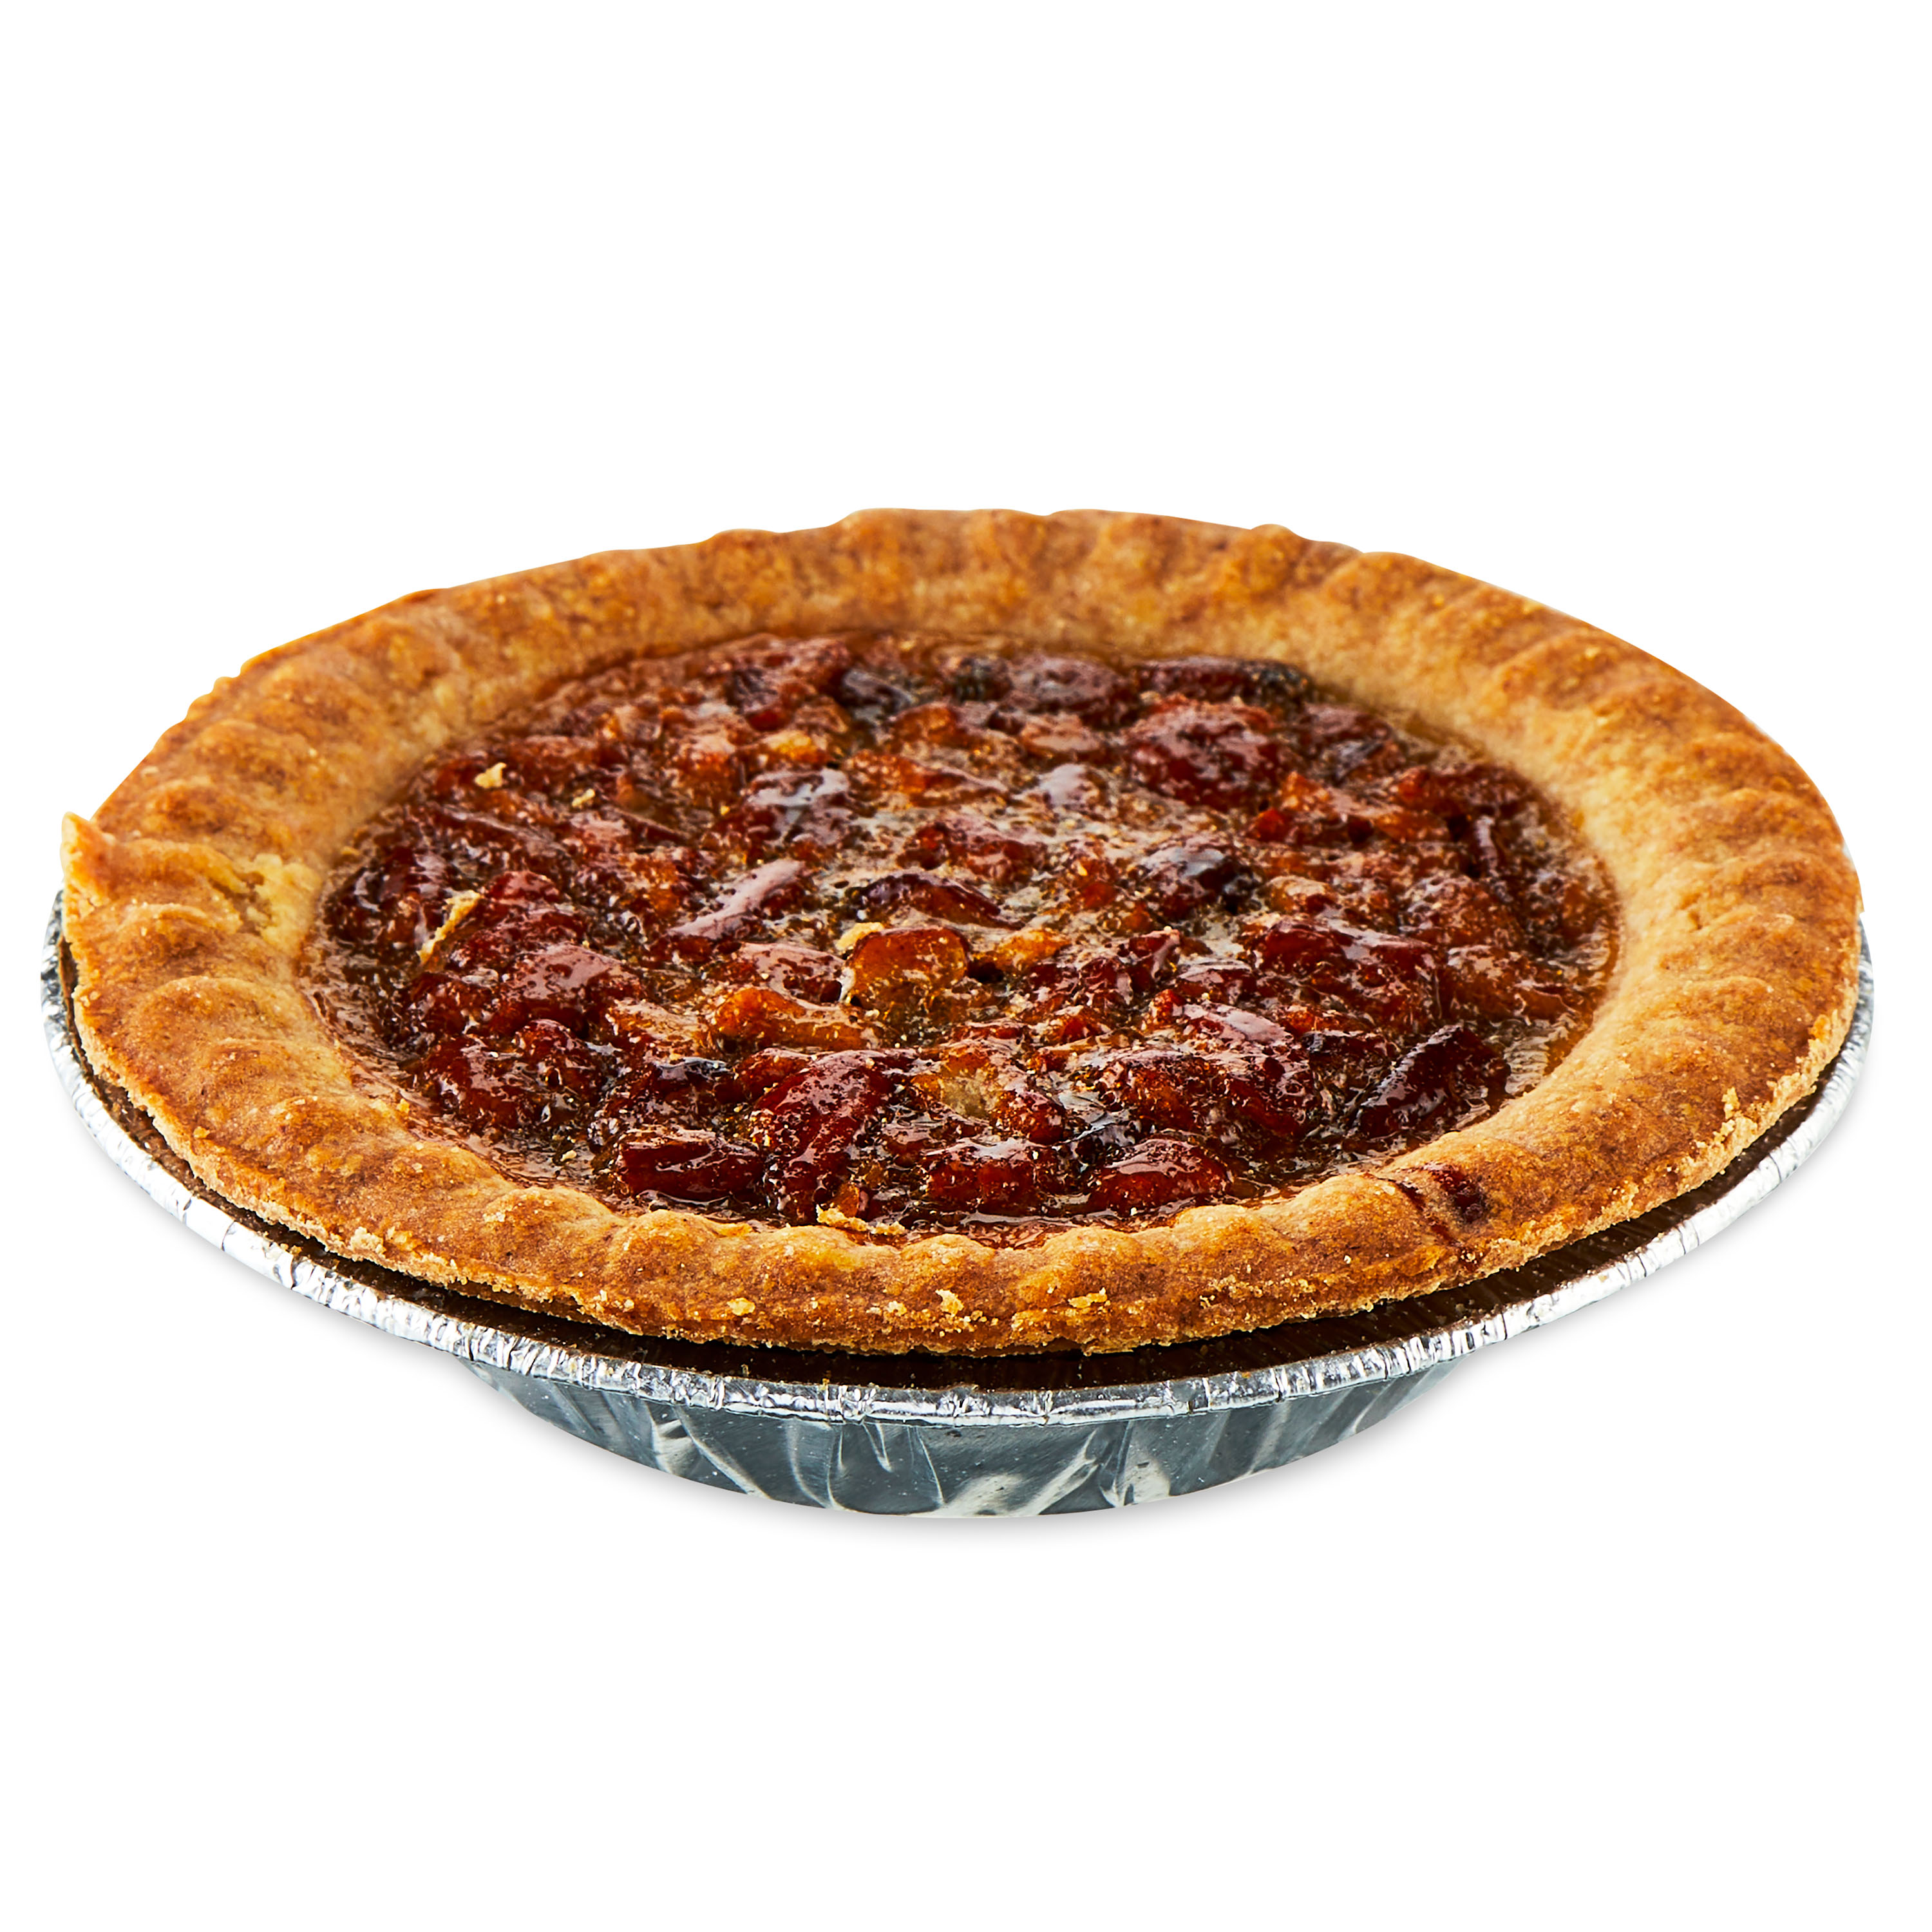 Freshness Guaranteed Mini Pecan Pie, 4 oz - image 1 of 8